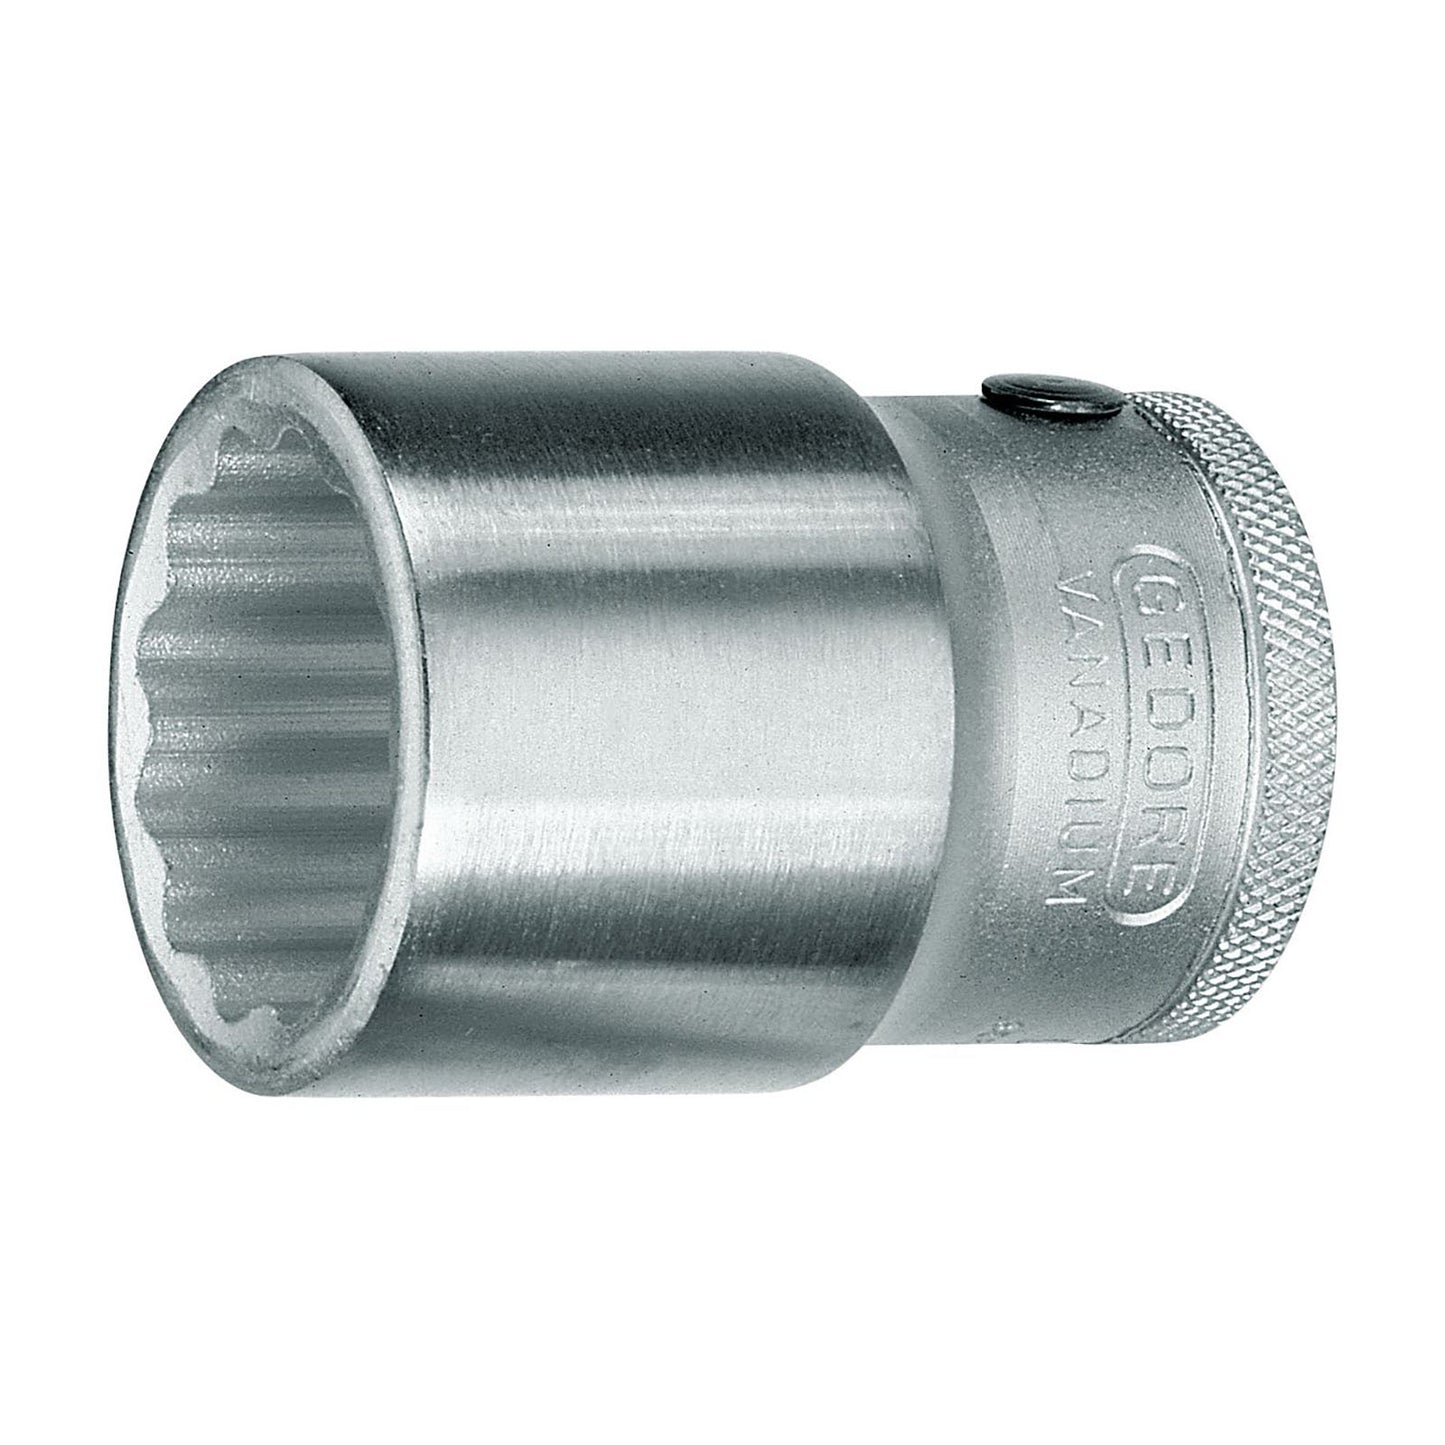 GEDORE D 32 50 - Unit Drive Socket 3/4", 50 mm (6273210)